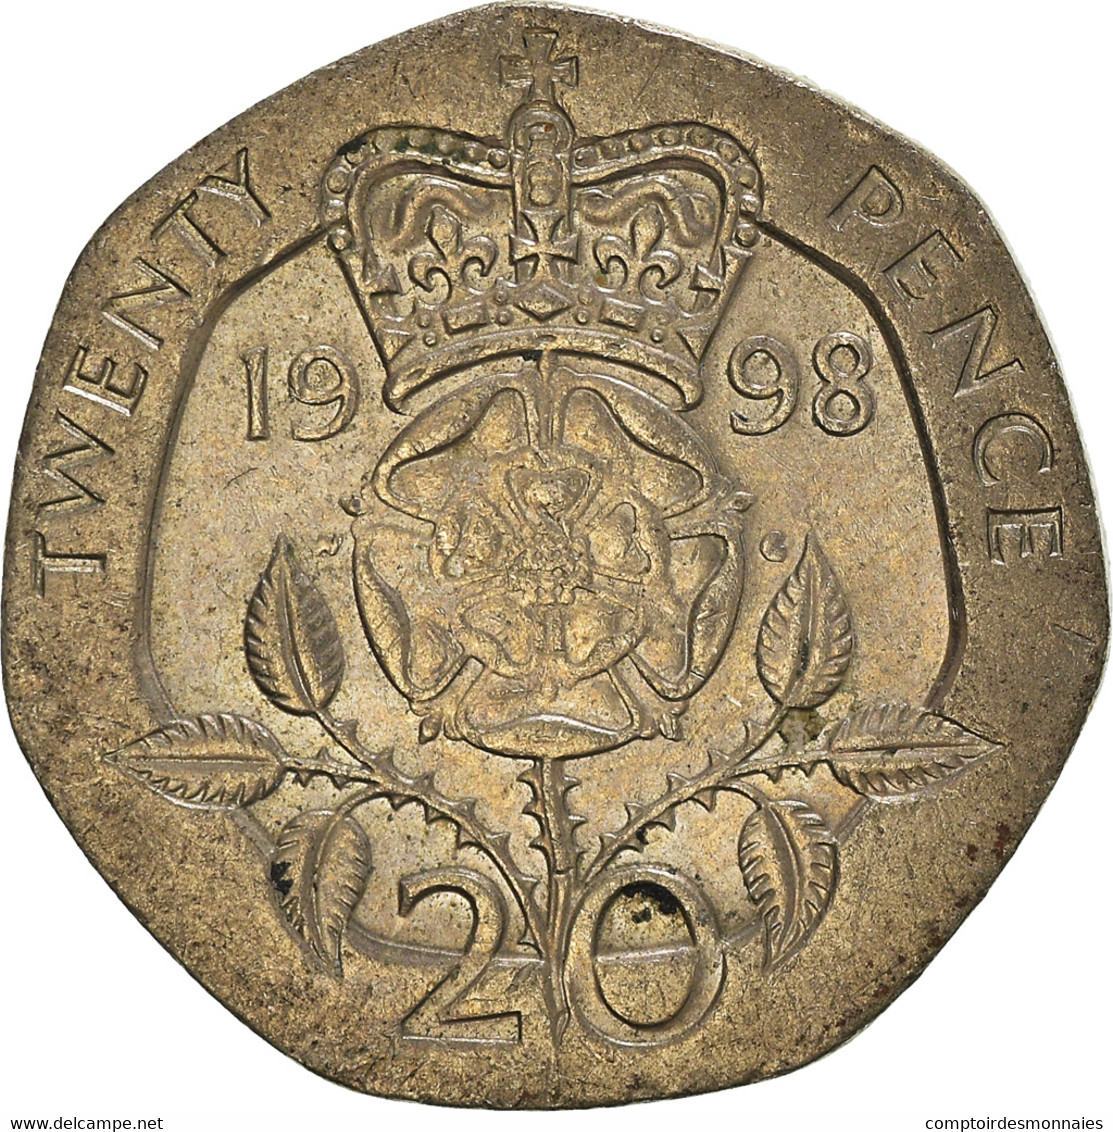 Monnaie, Grande-Bretagne, 20 Pence, 1998 - 20 Pence